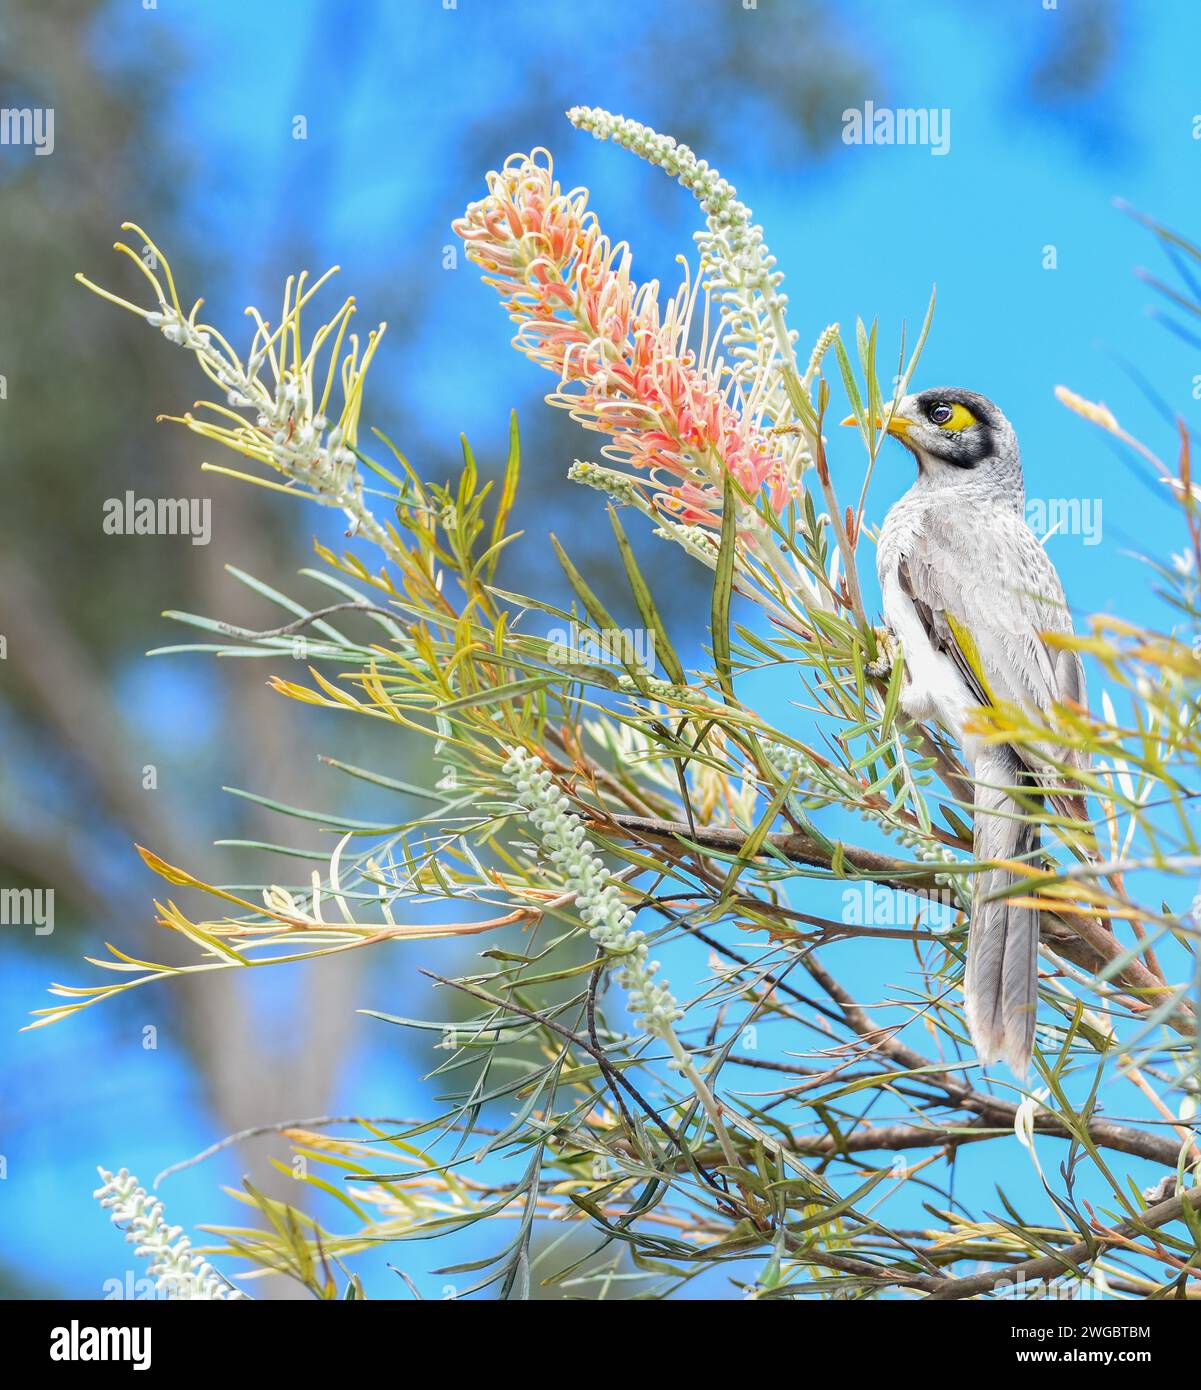 Pájaro minero ruidoso (Manorina melanocephala) posado en un árbol de grevillea, Australia Foto de stock